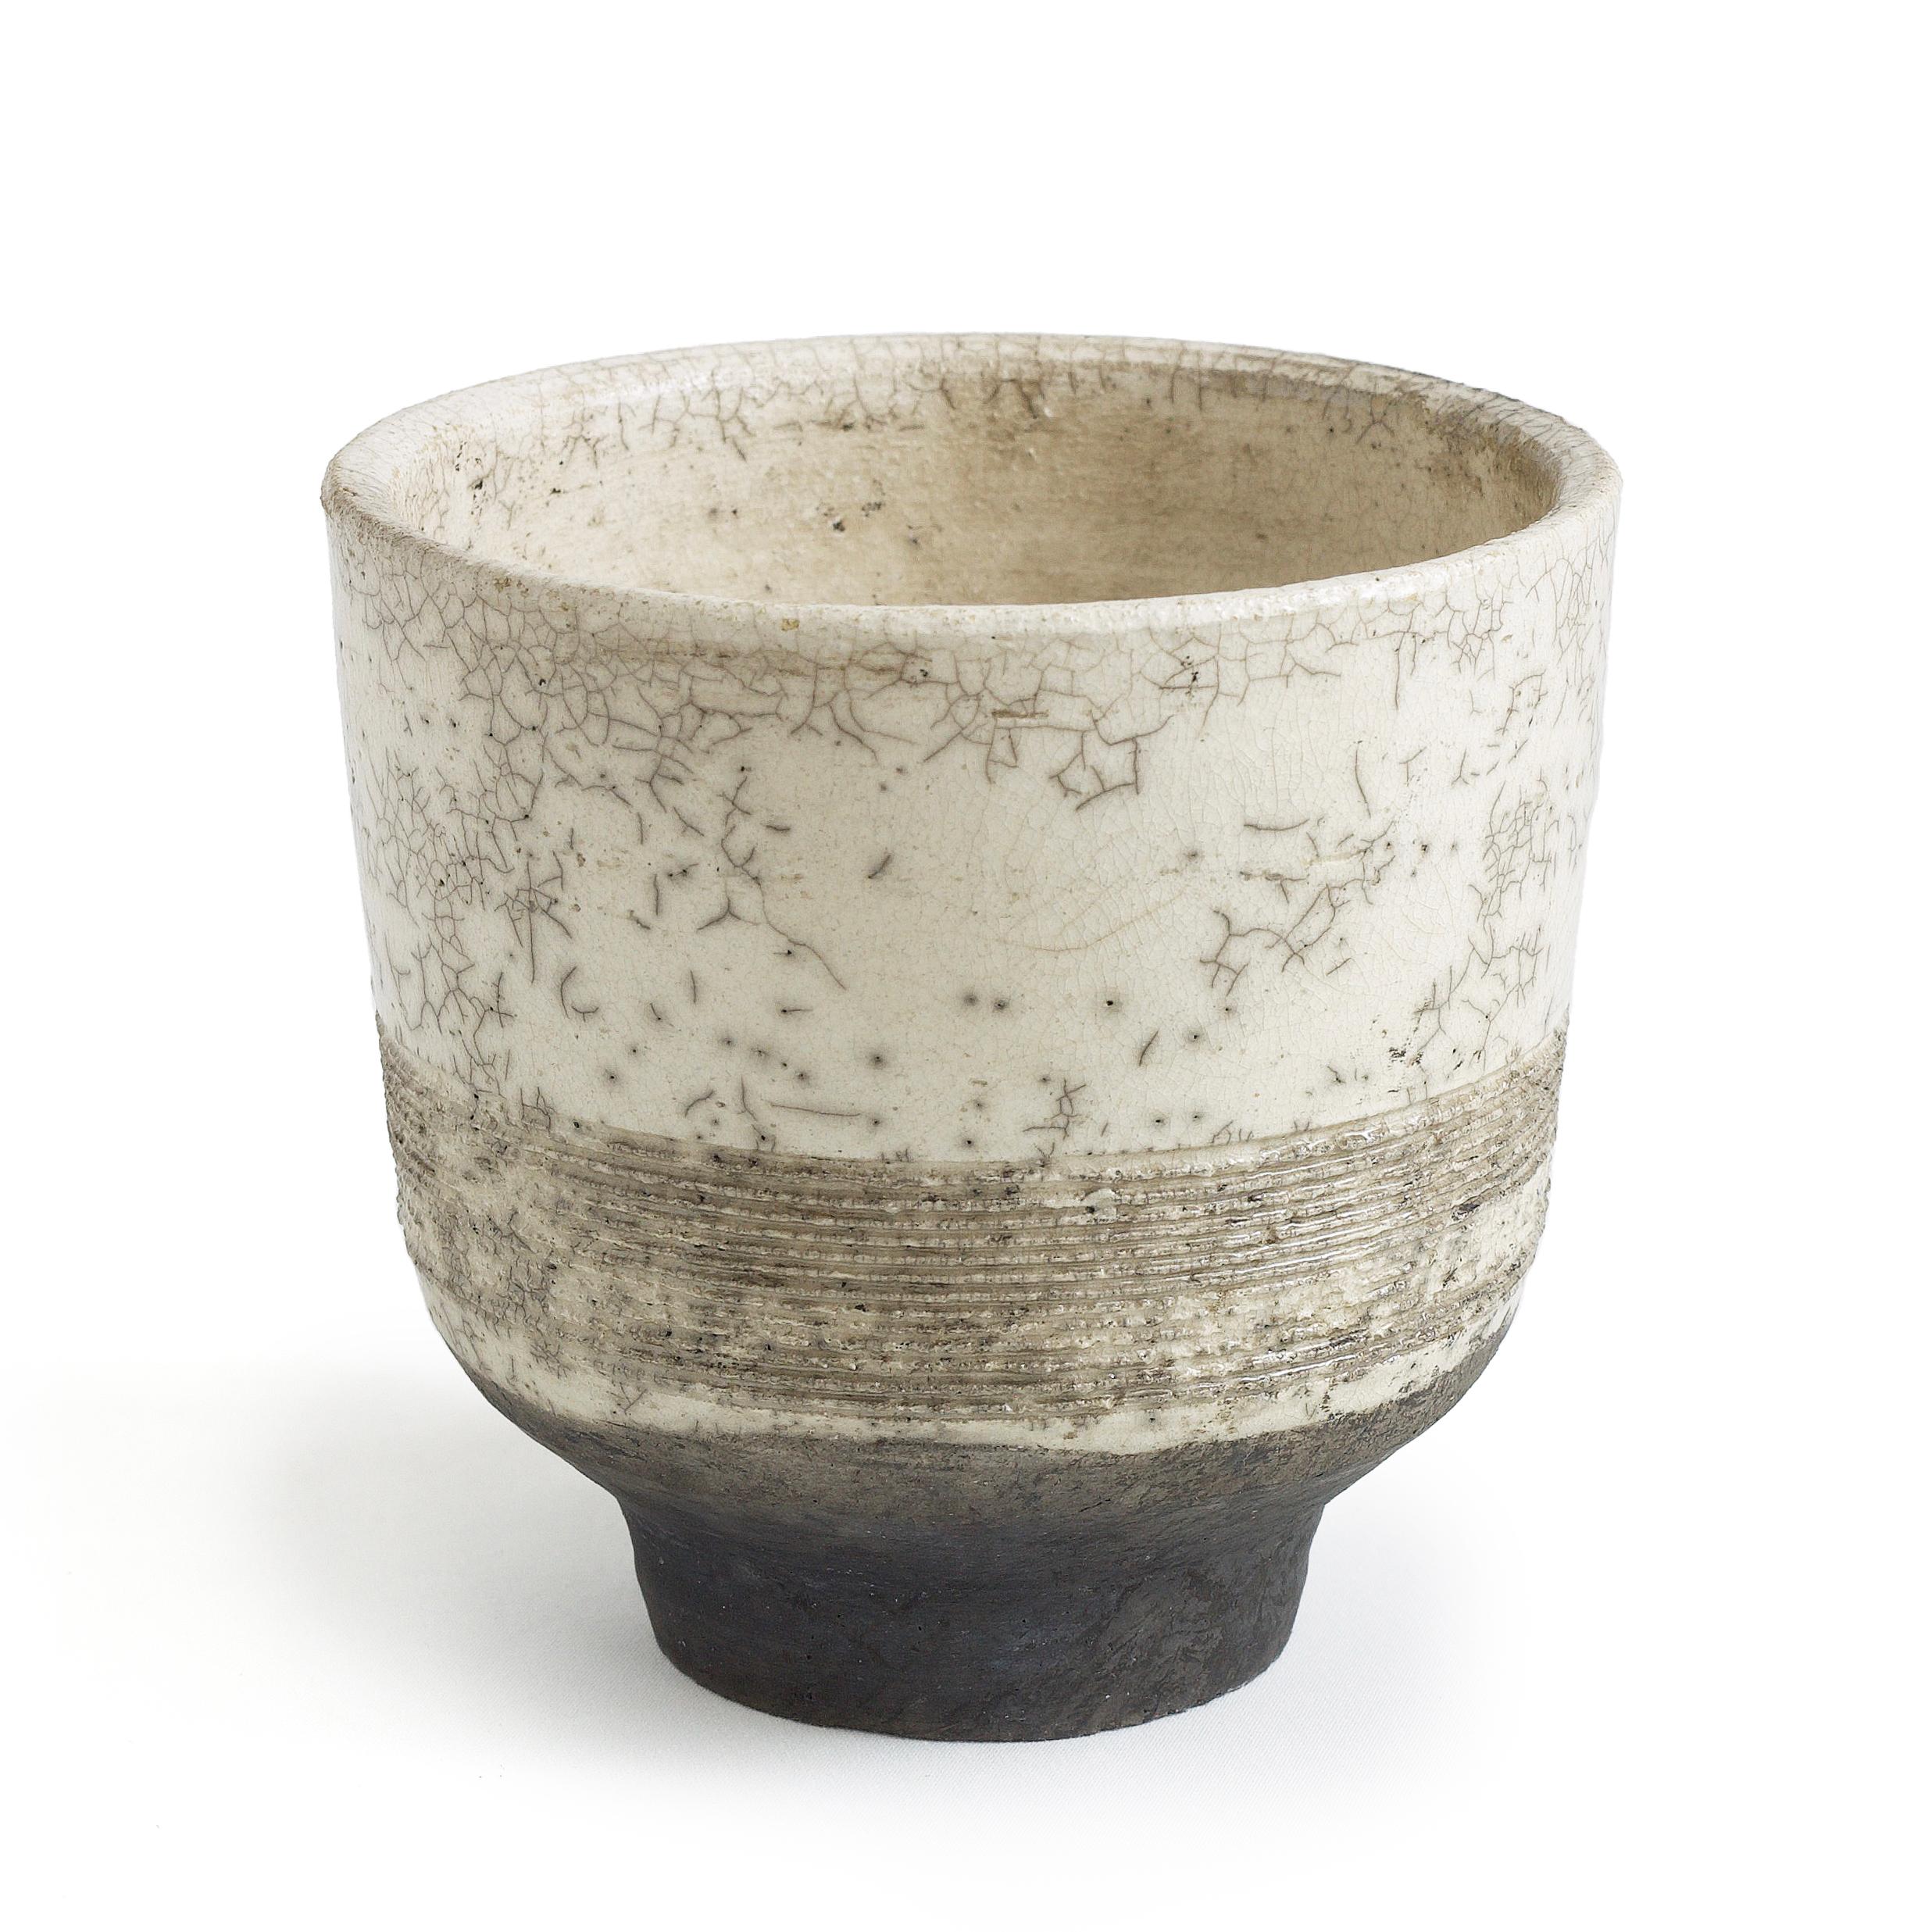 Japanese Yunomi Tea Cup Raku Ceramic Black Base In New Condition For Sale In monza, Monza and Brianza